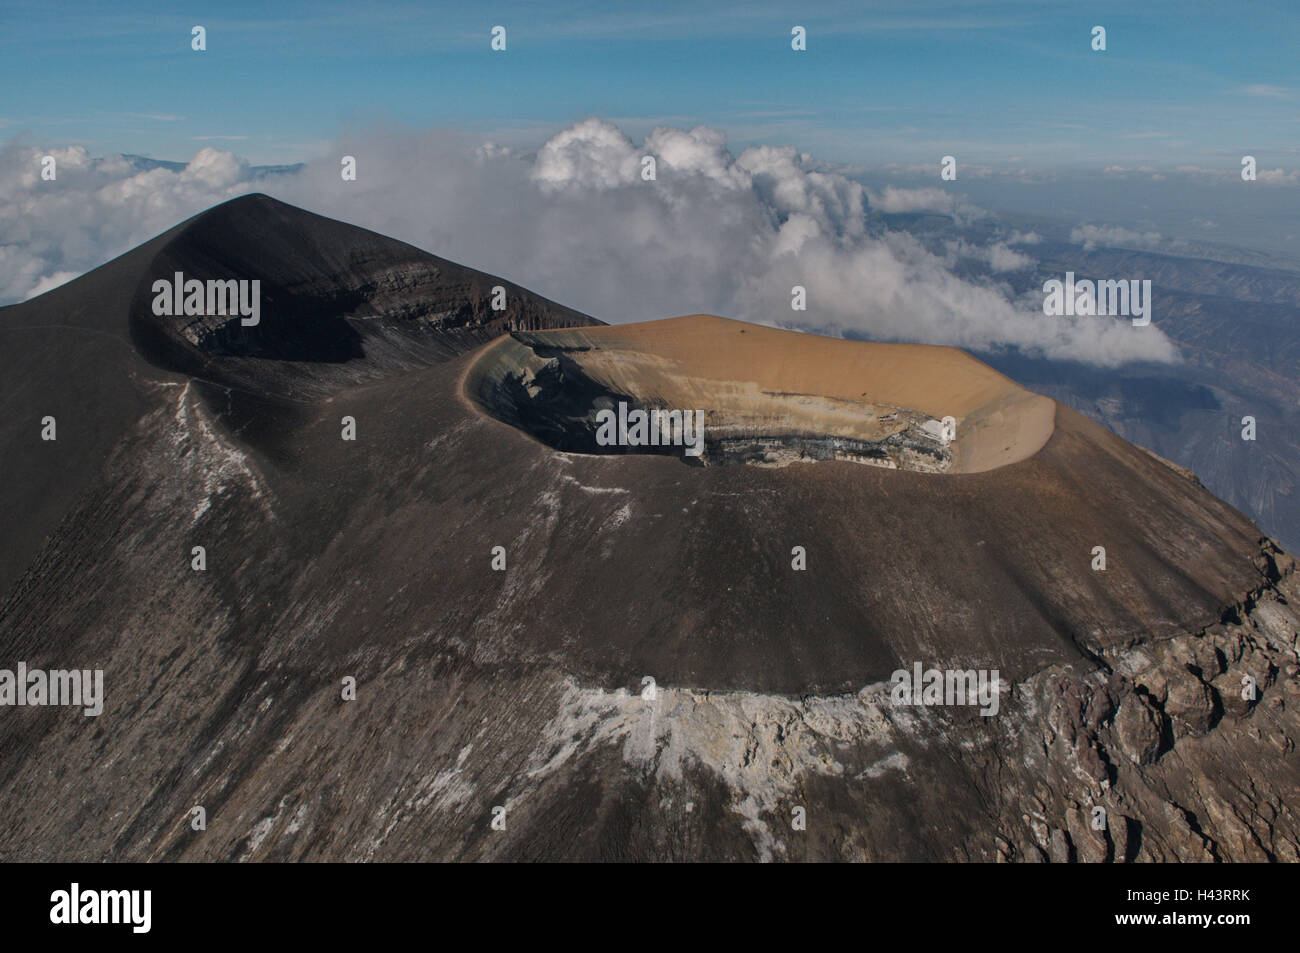 Africa, Tanzania, Ngorongoro highland, Ol Doinyo Lengai, volcano, crater, aerial shots, Stock Photo